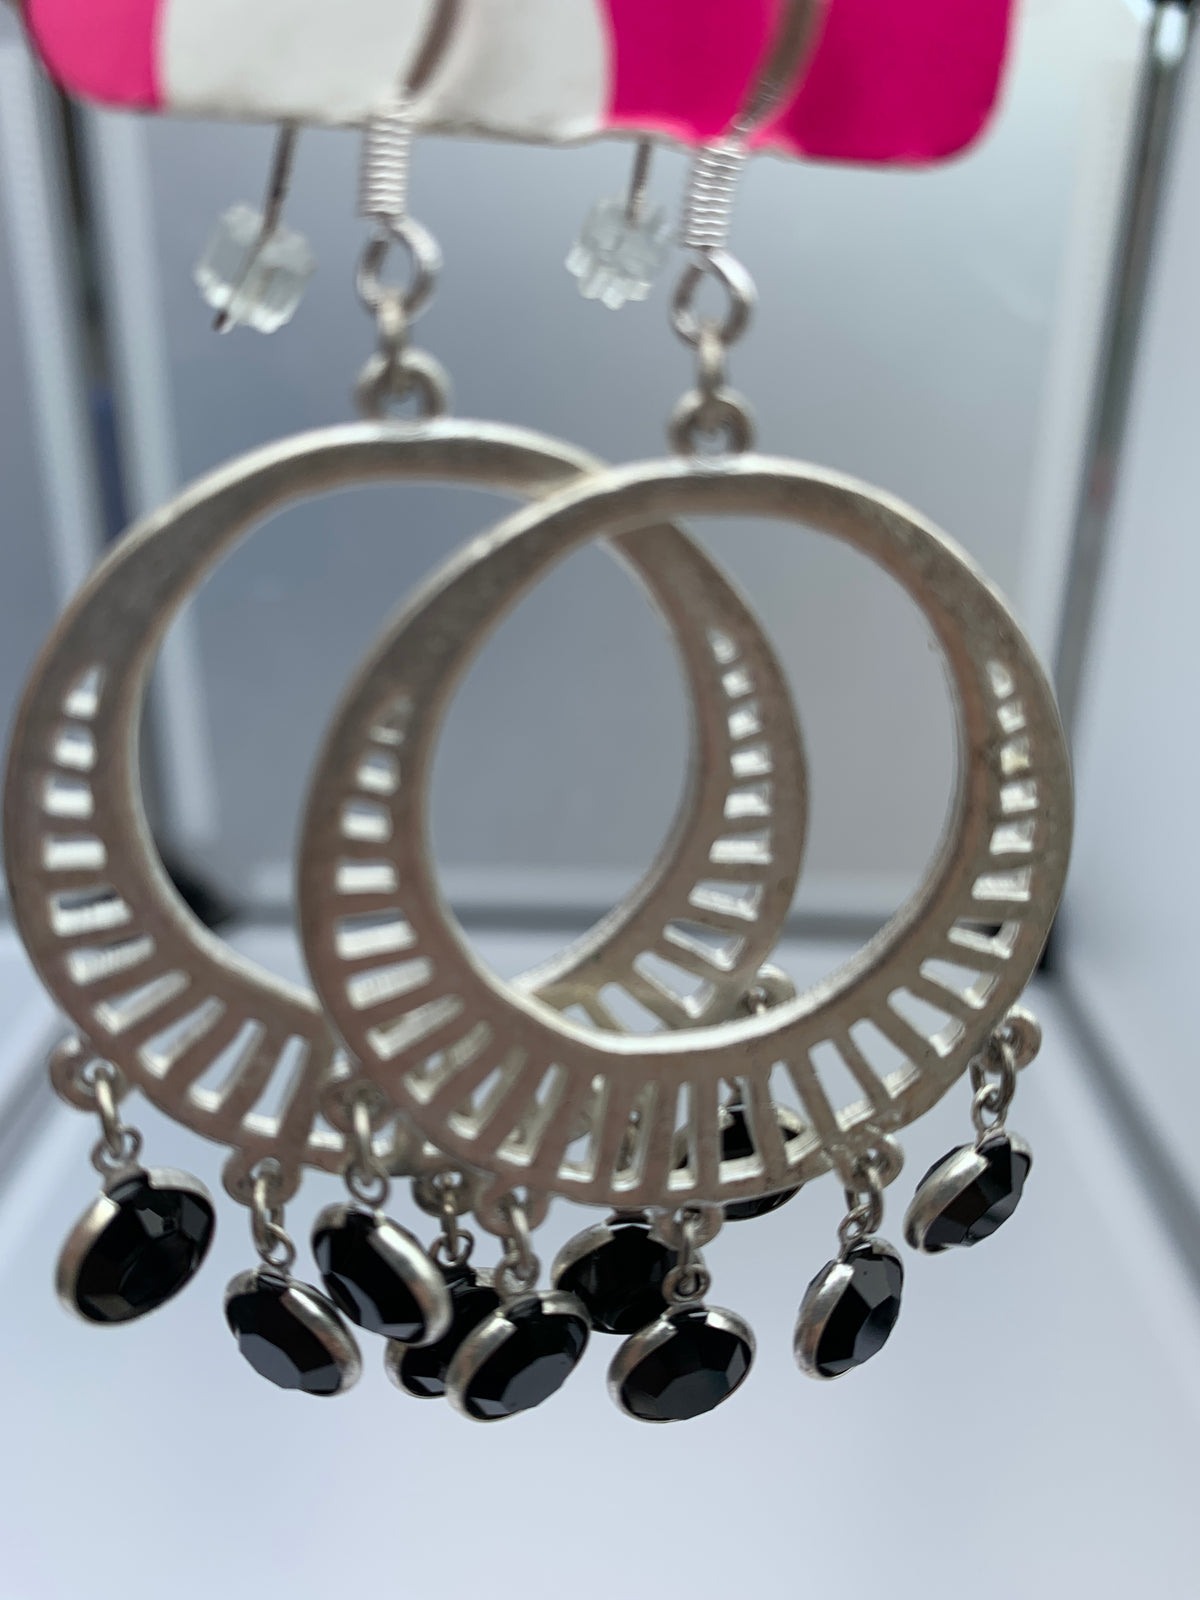 Circular earrings with black stone dangles